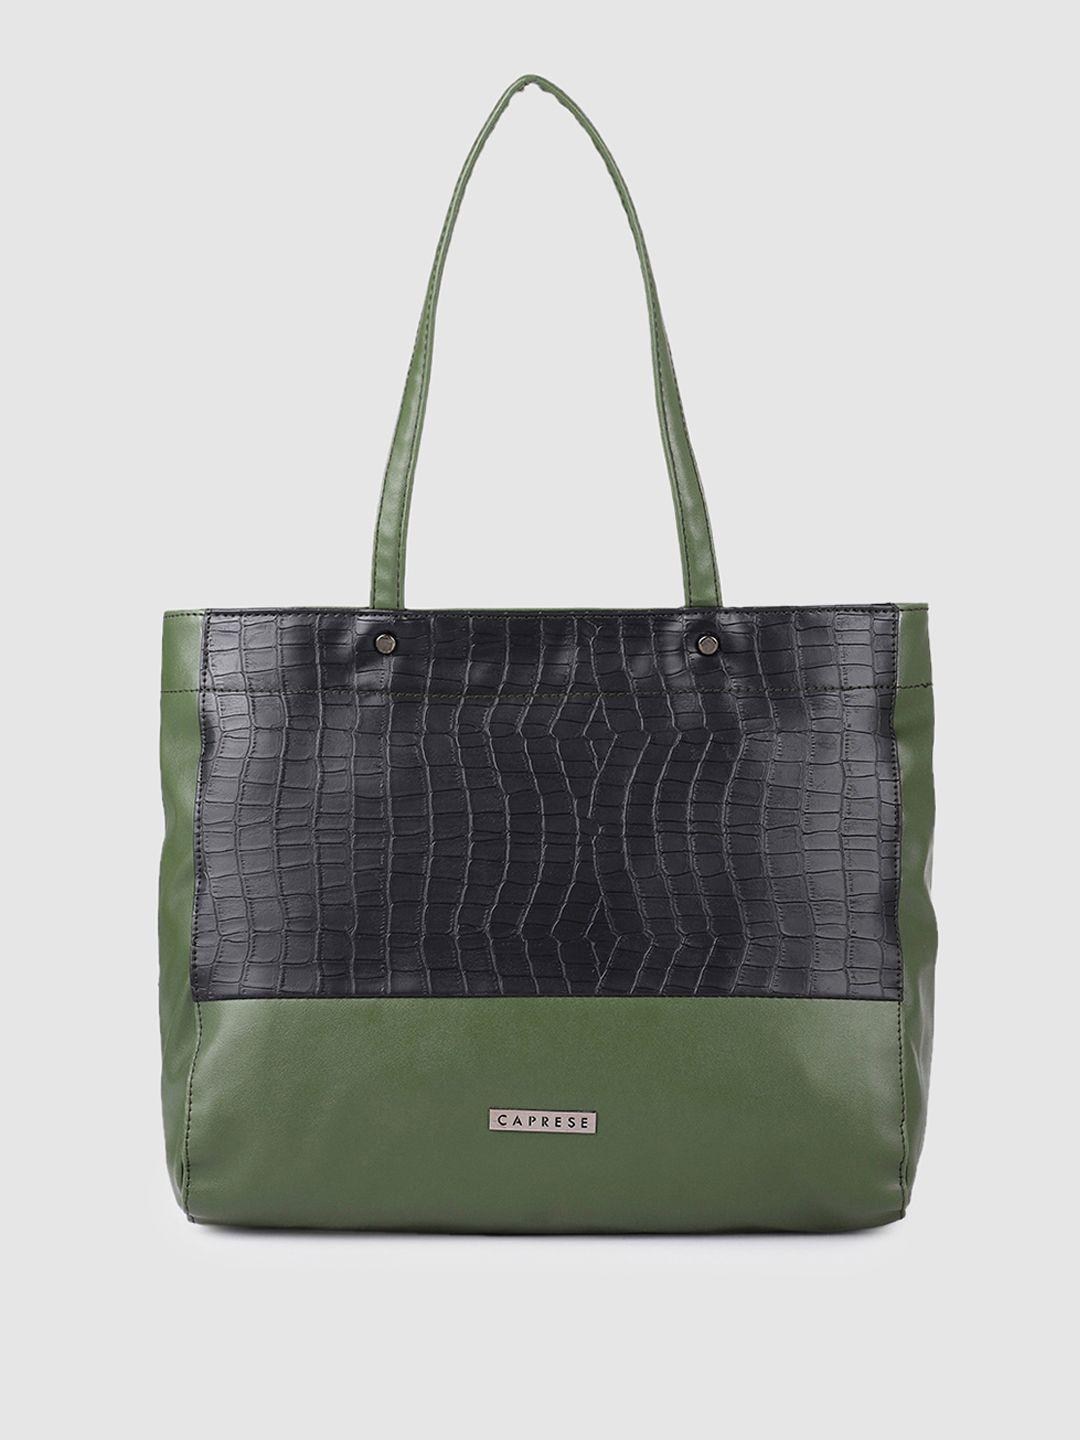 caprese olive green solid leather regular structured shoulder bag with animal textured